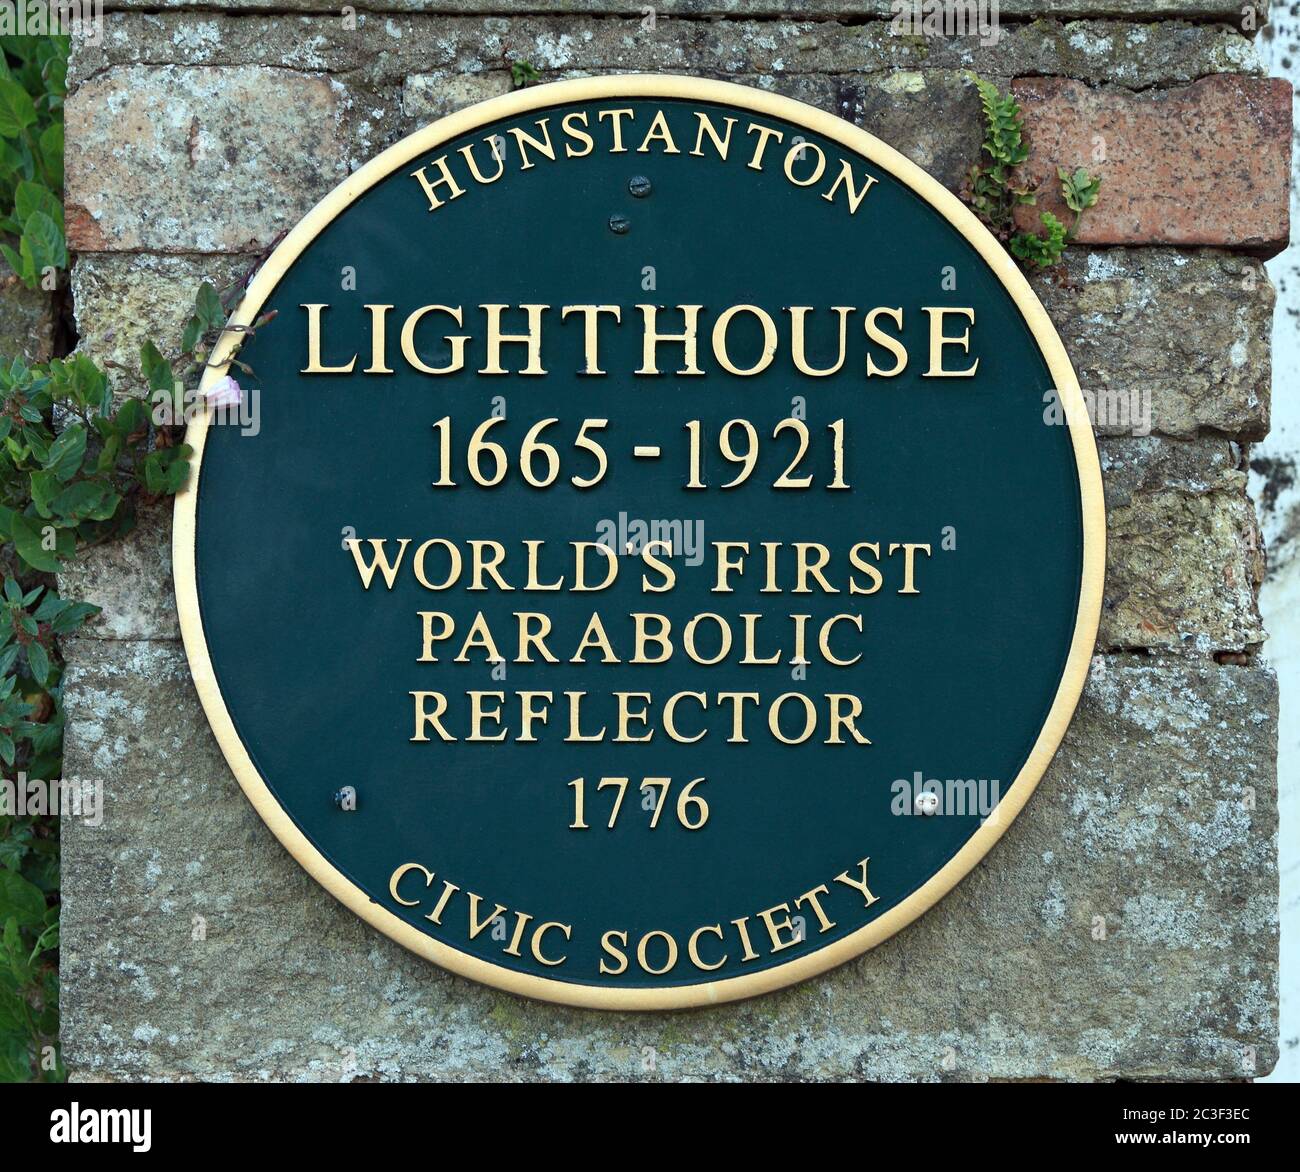 Hunstanton Lighthouse, Civic Society sign, Norfolk, England, UK Stock Photo